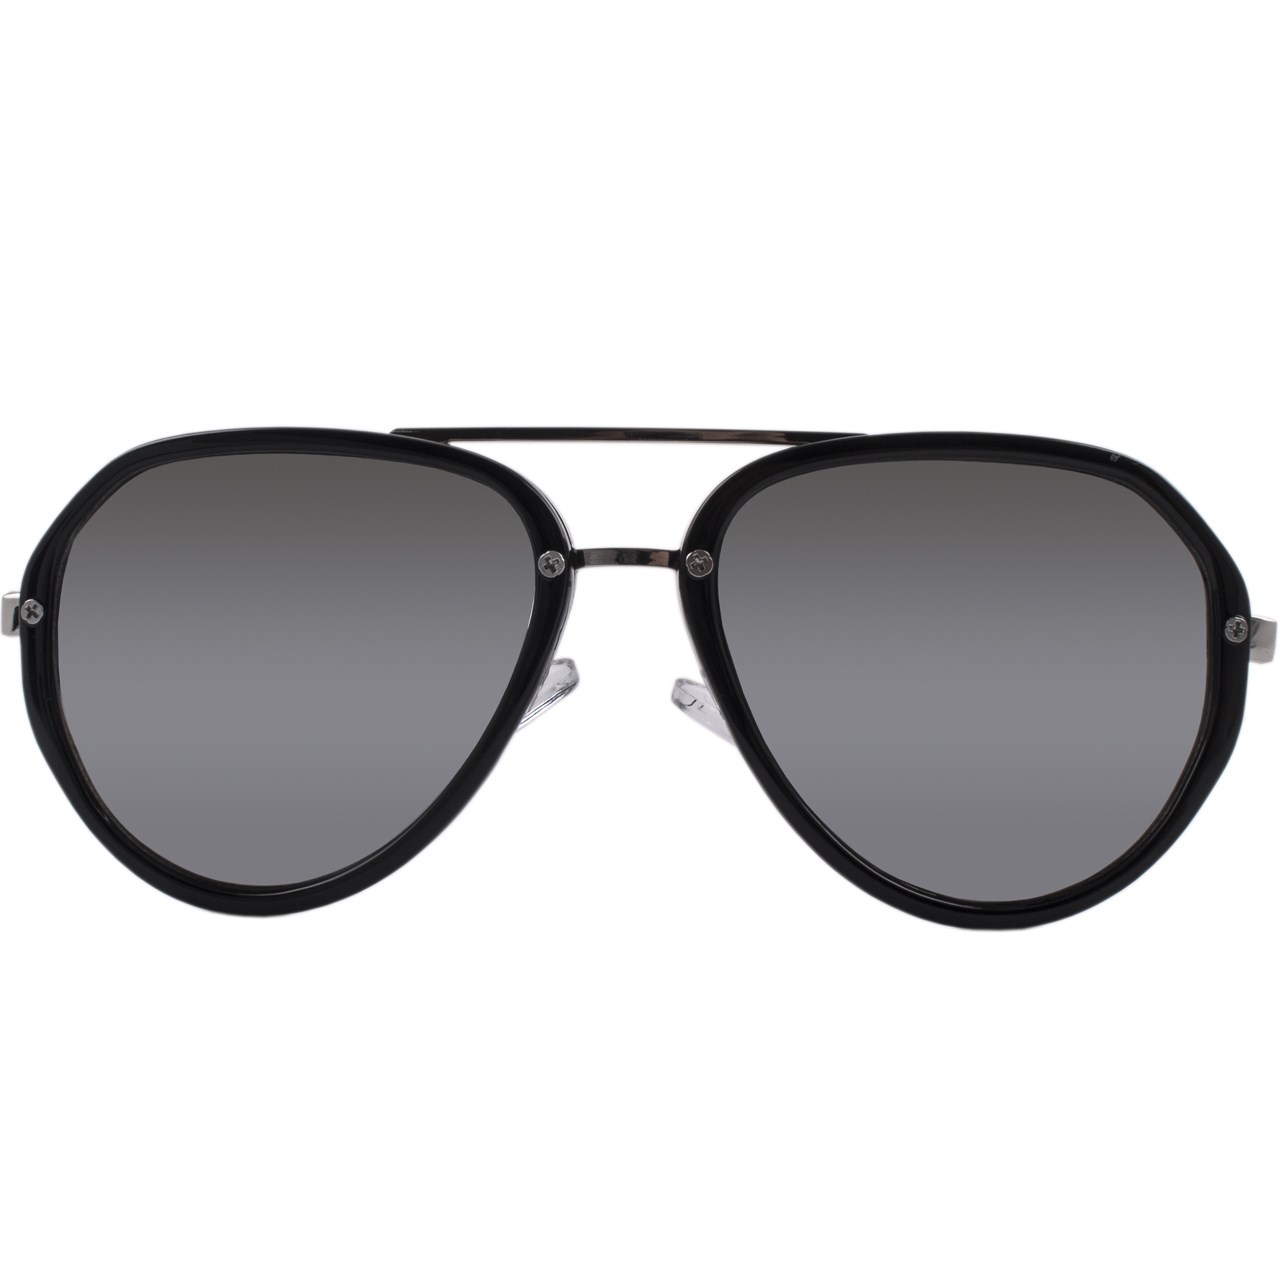 عینک آفتابی واته مدل C 105 BL-A